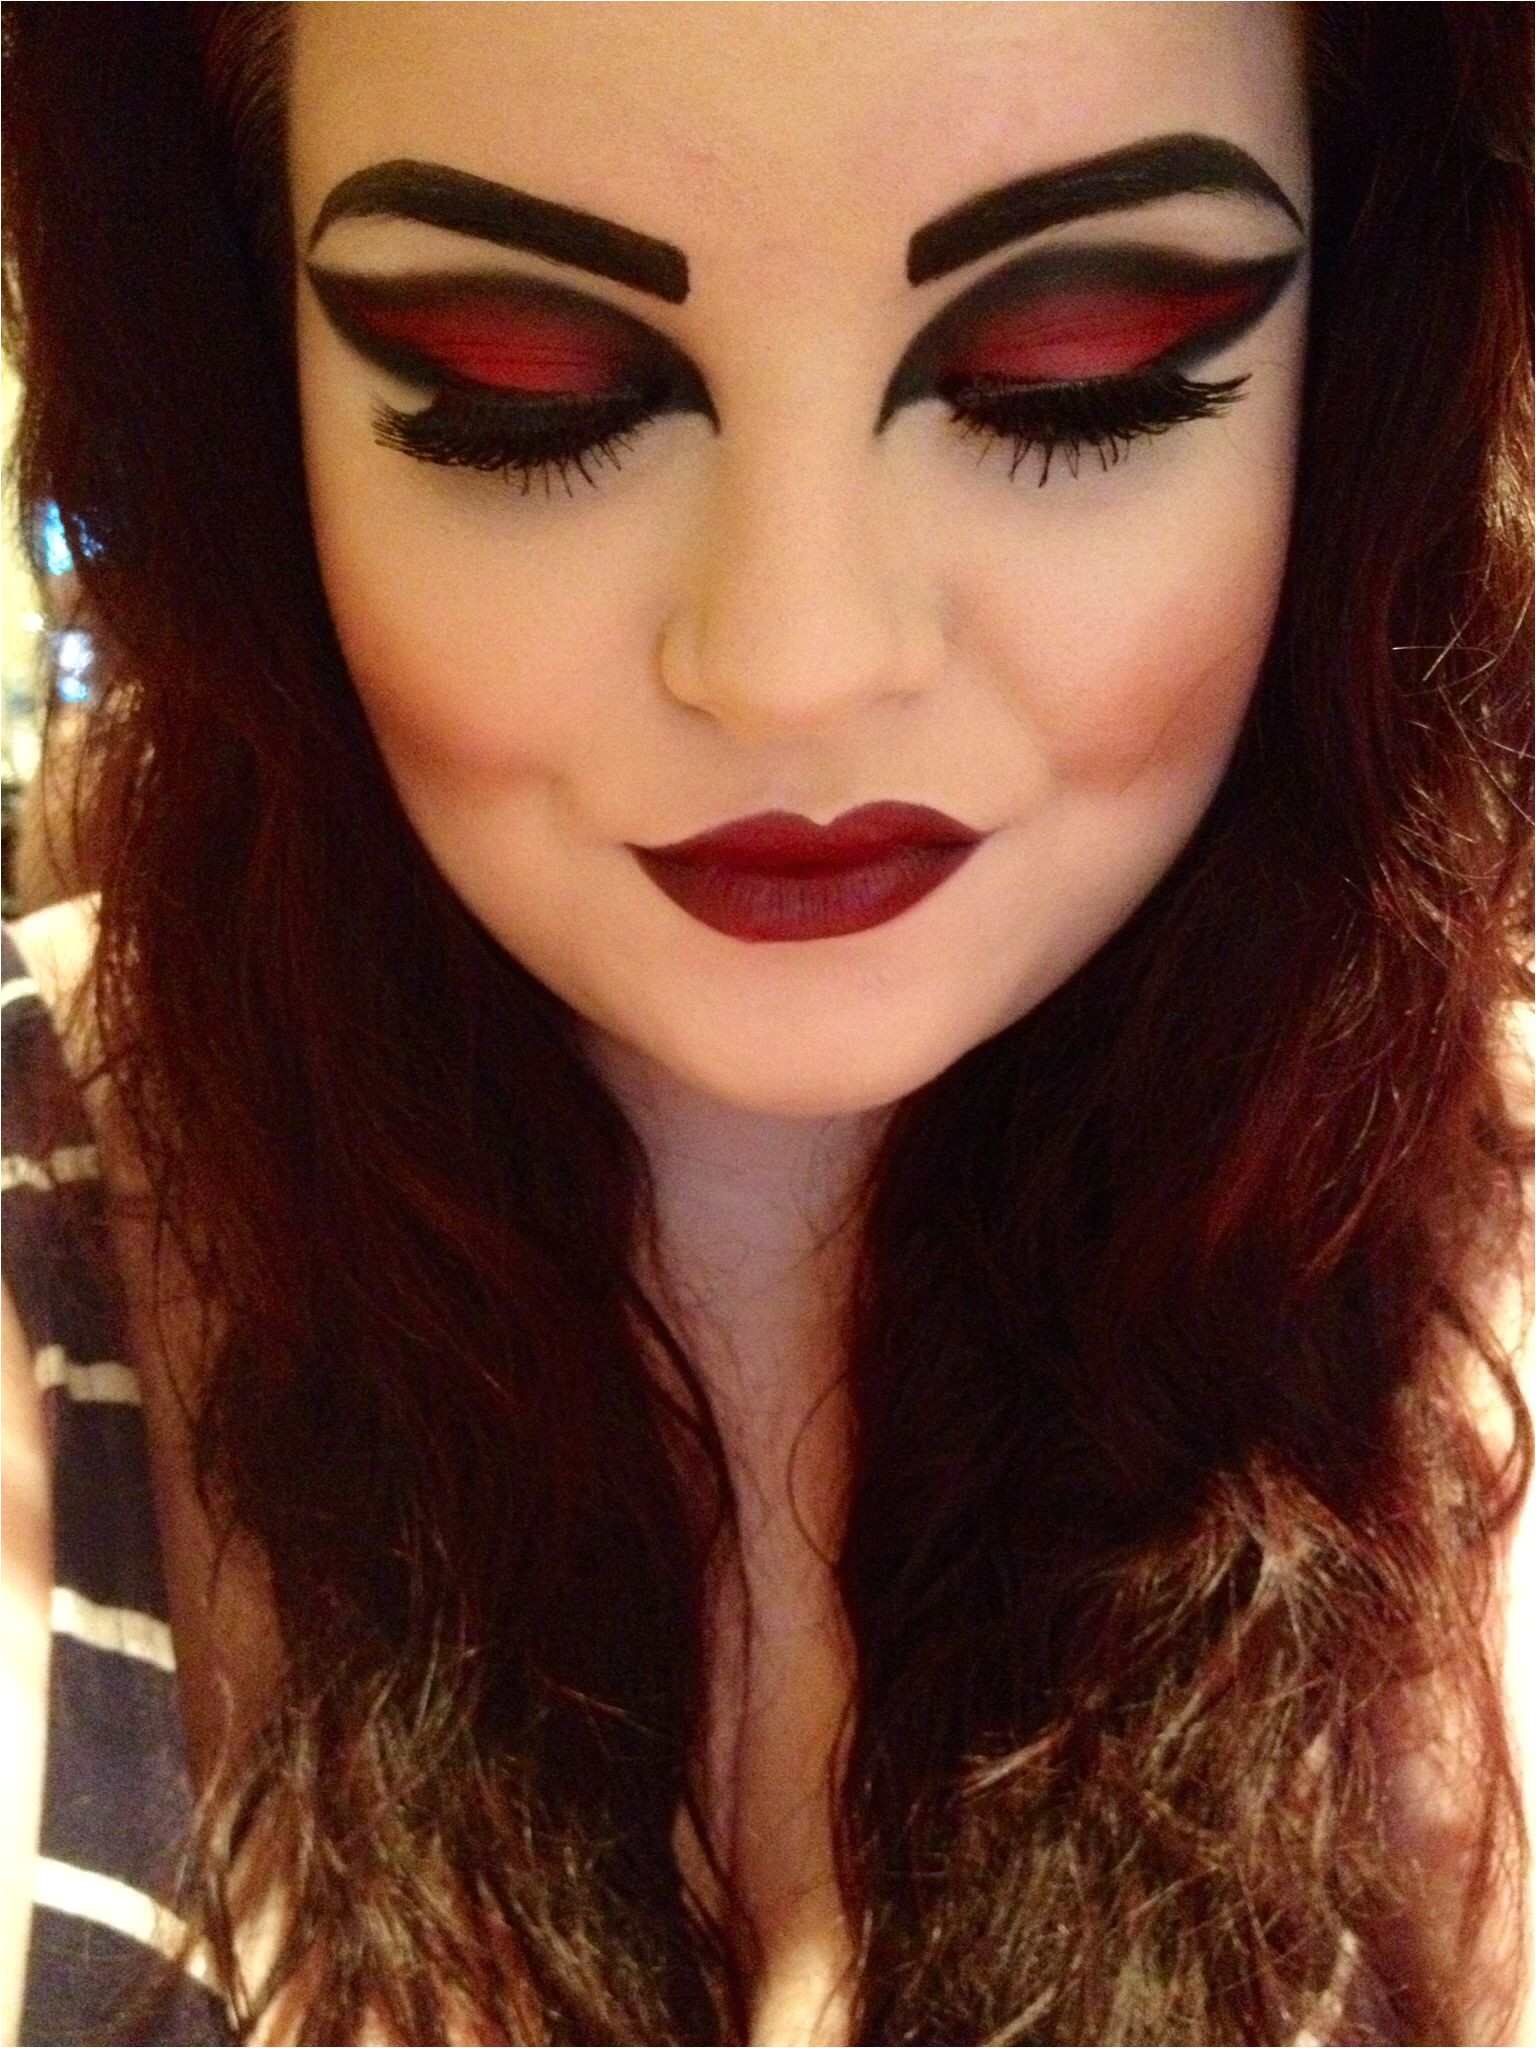 Vampire Hairstyles for Girls Vampire Halloween Makeup My Own Makeup Looks Pinterest